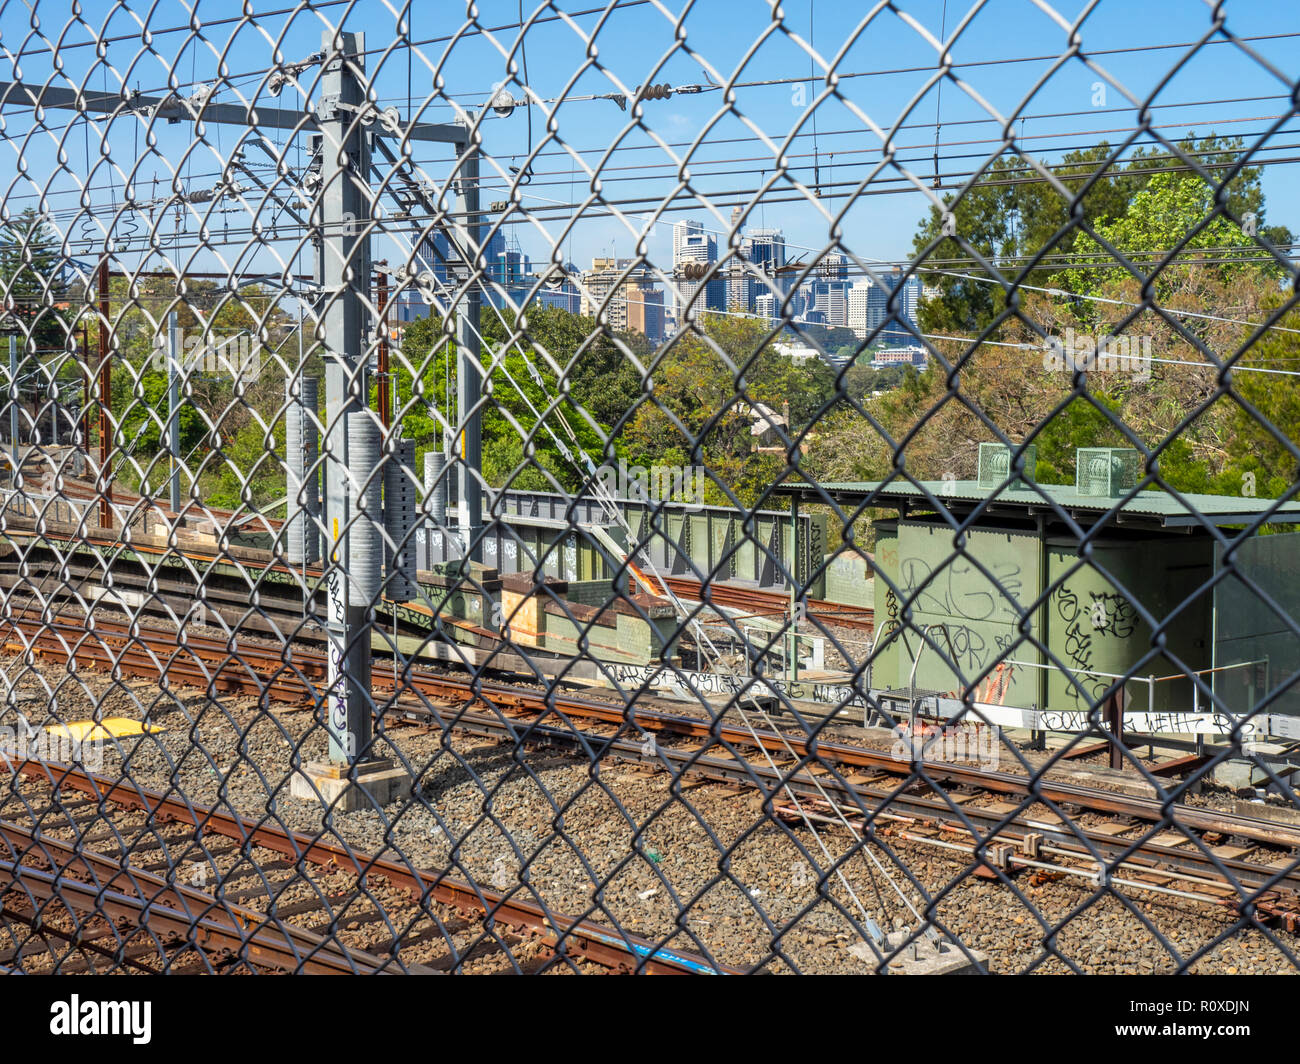 Train railway transport system seen through chain-link cyclone fence Sydney NSW Australia. Stock Photo